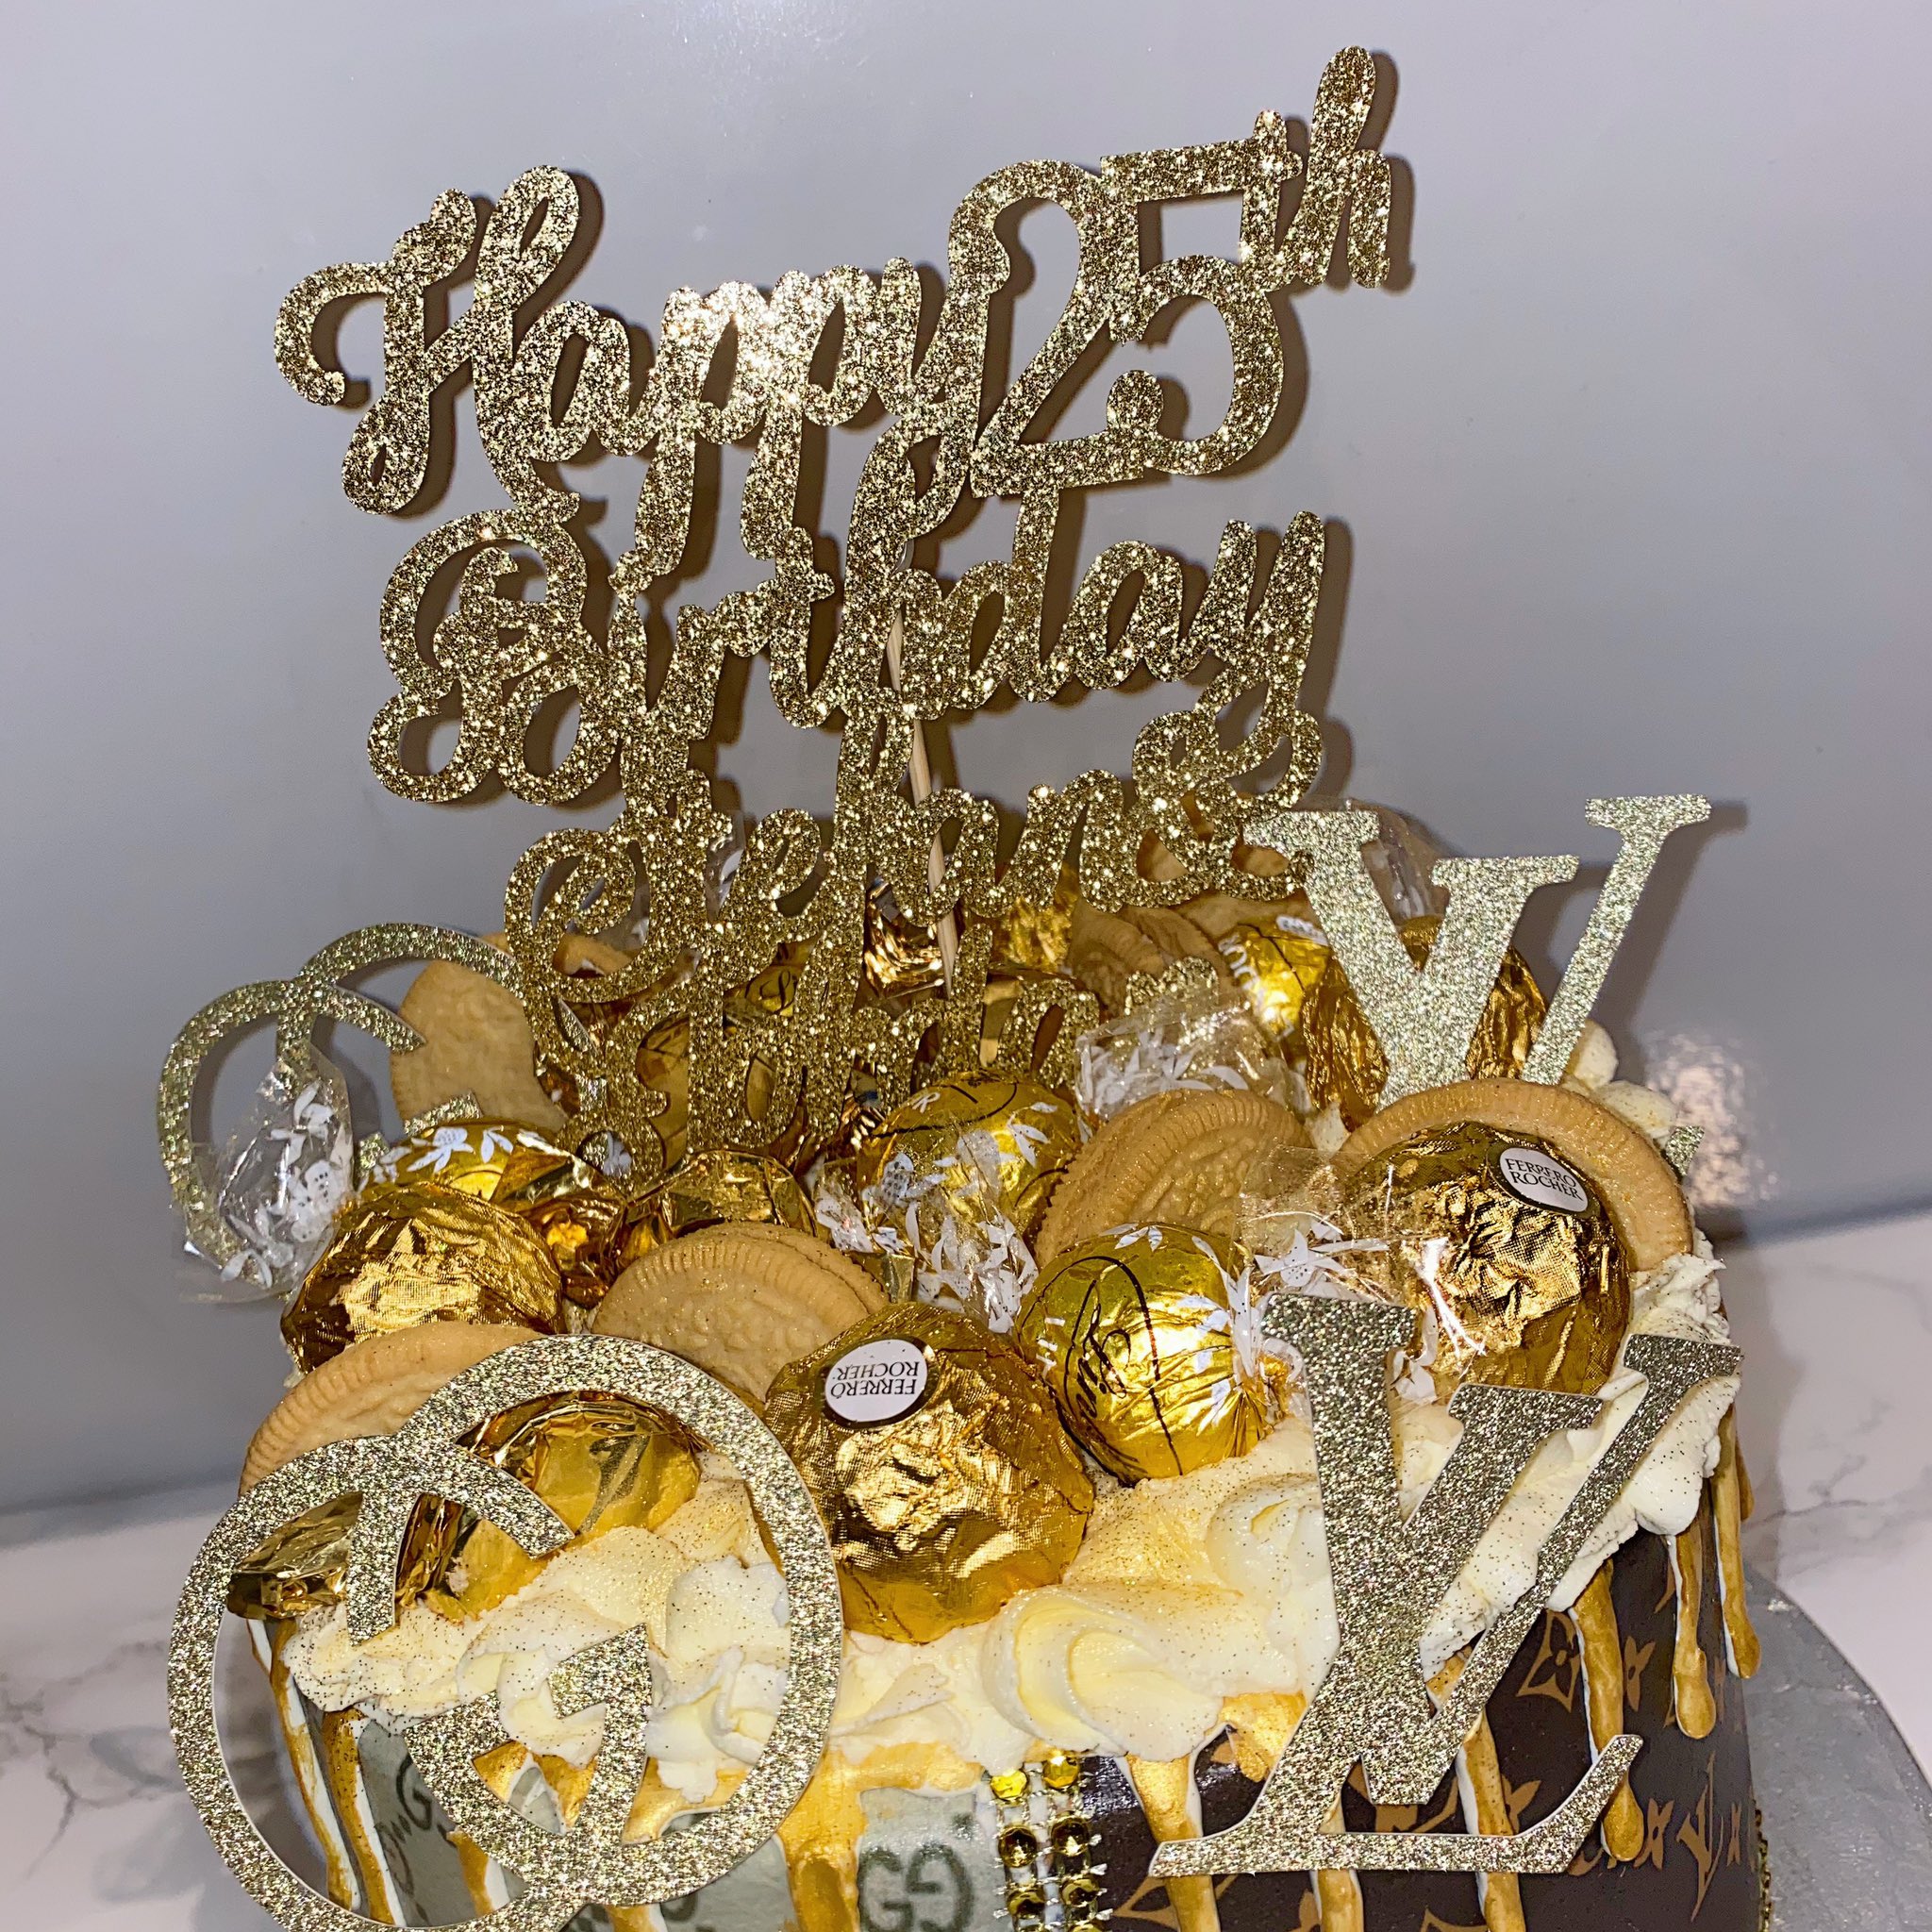 Cakes by Virgo, LLC on Instagram: Versace, Gucci and Louis Vuitton Cake  #versacecake #guccicake #louisvuittoncake #cakesbyvirgo #orlandocakes